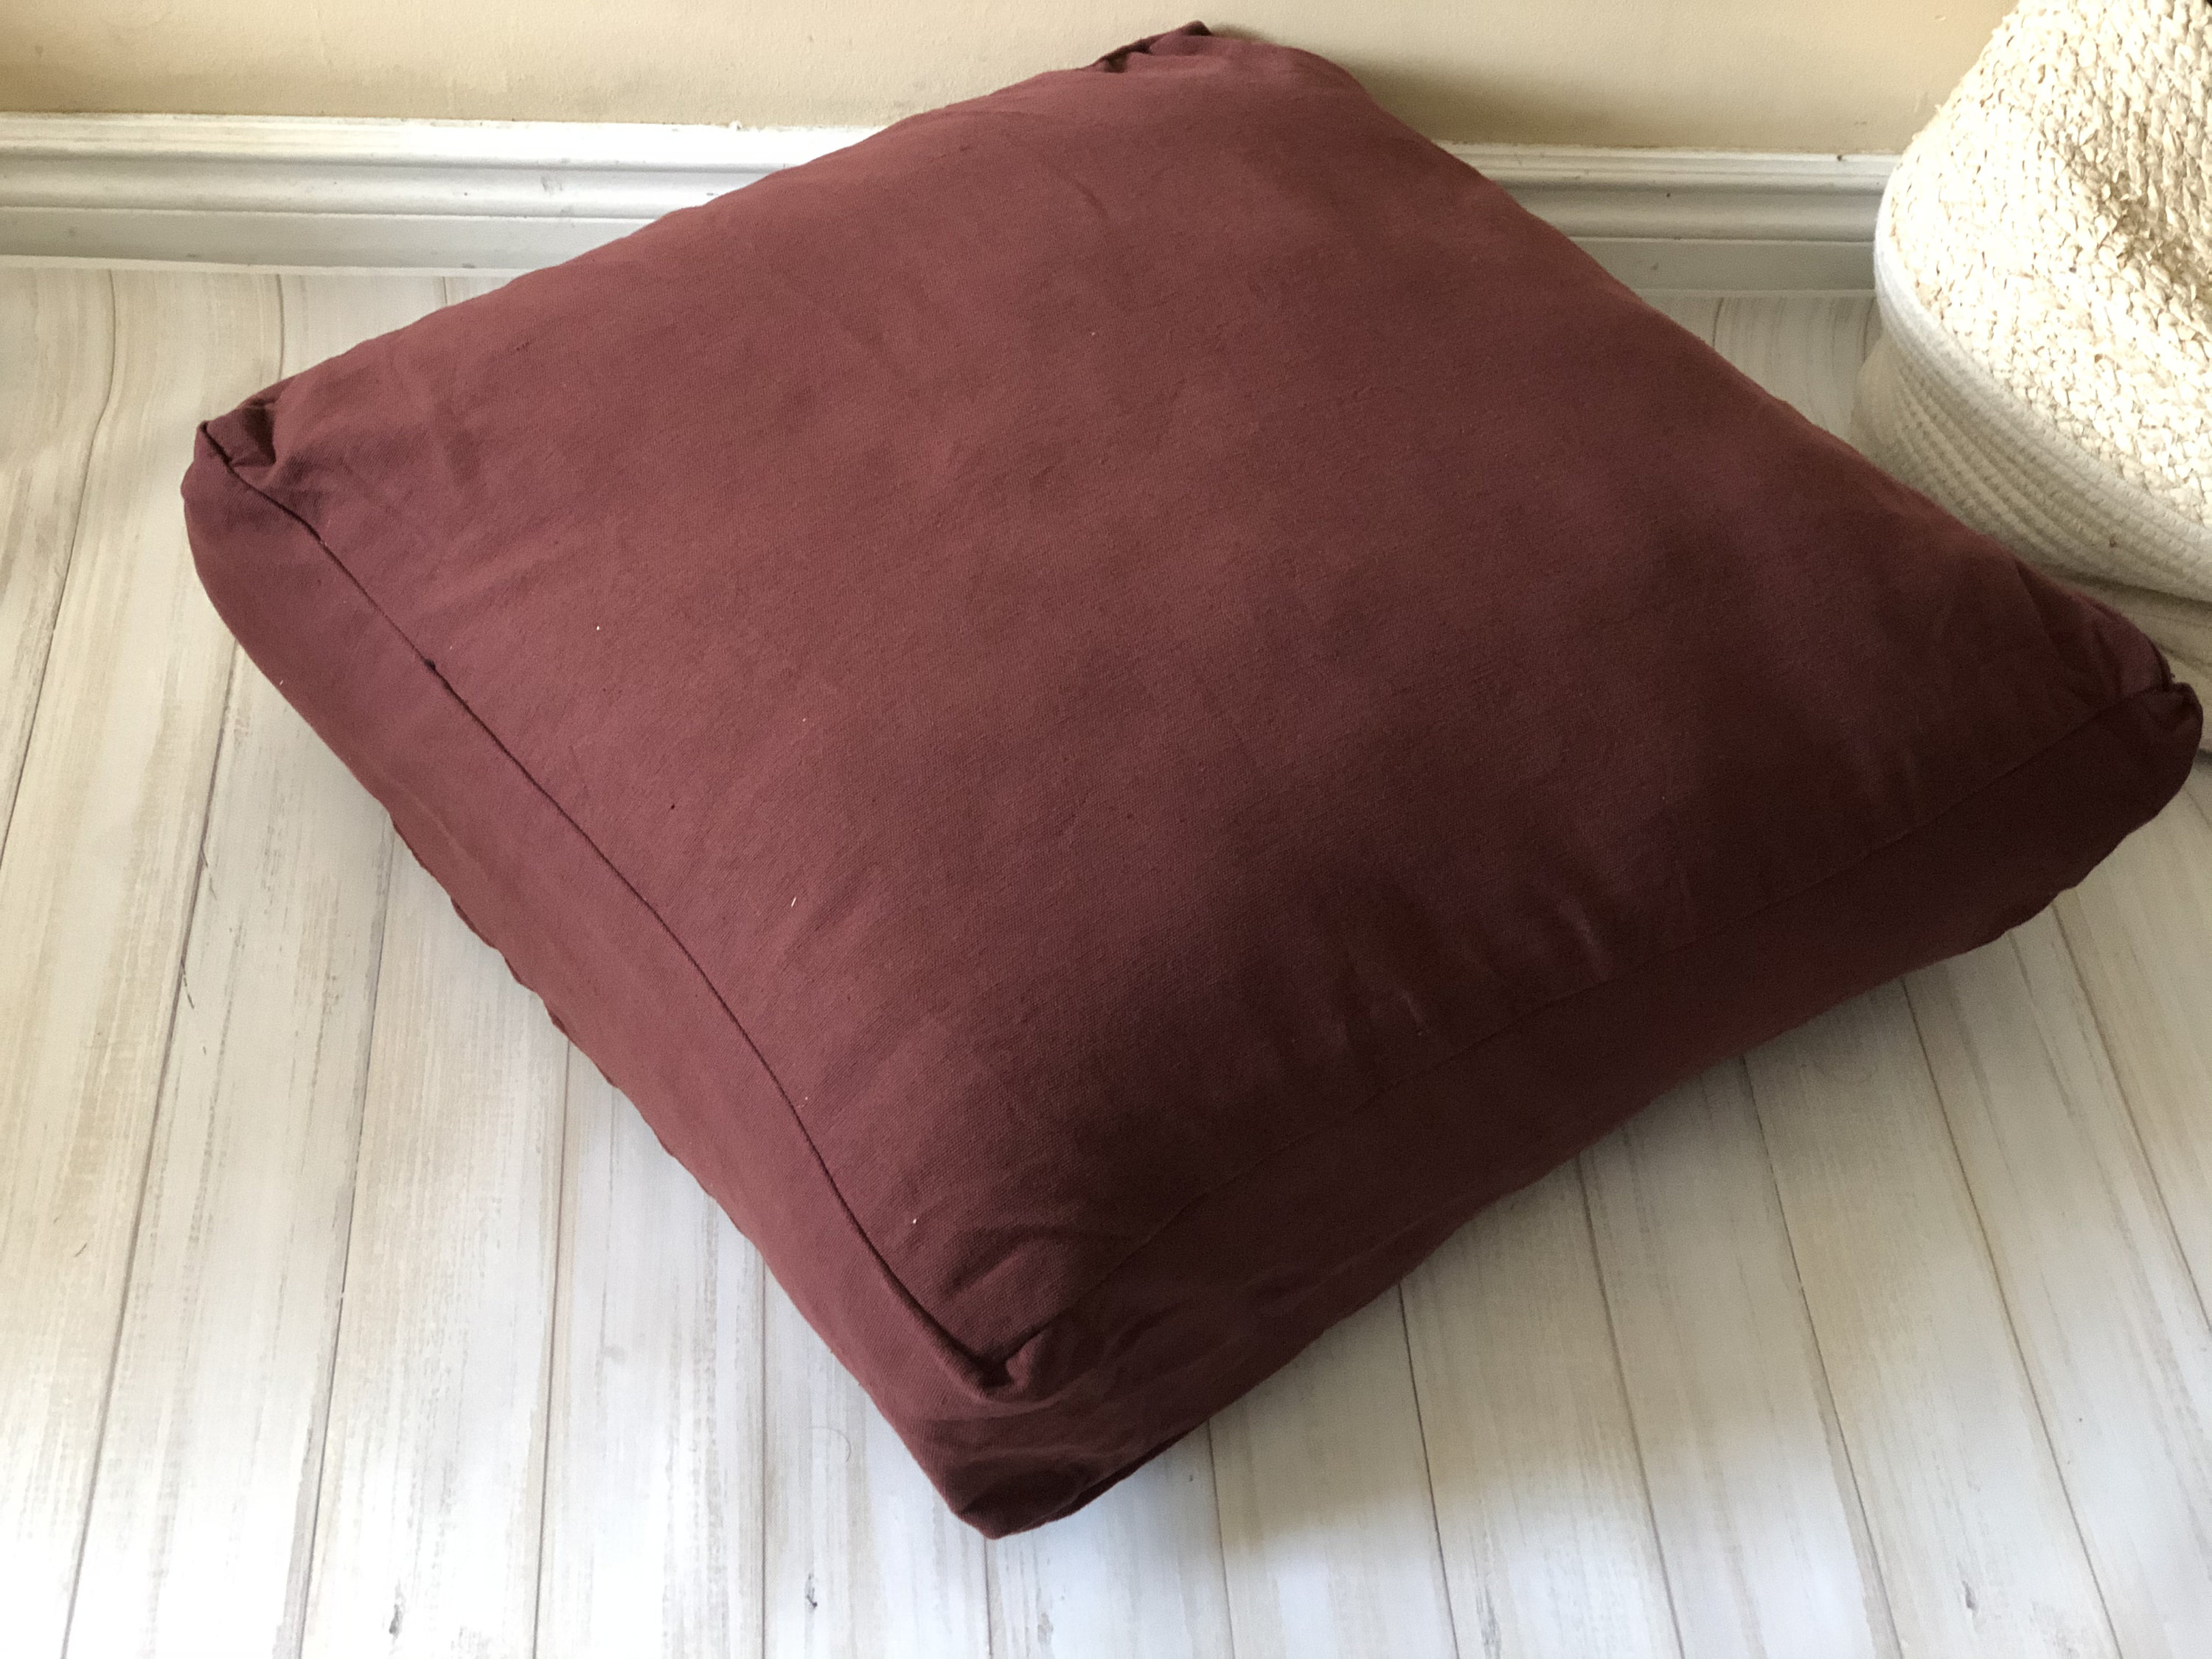 24 X 34 Upholstery Foam Cushion, High Density, Chair Cushion Foam